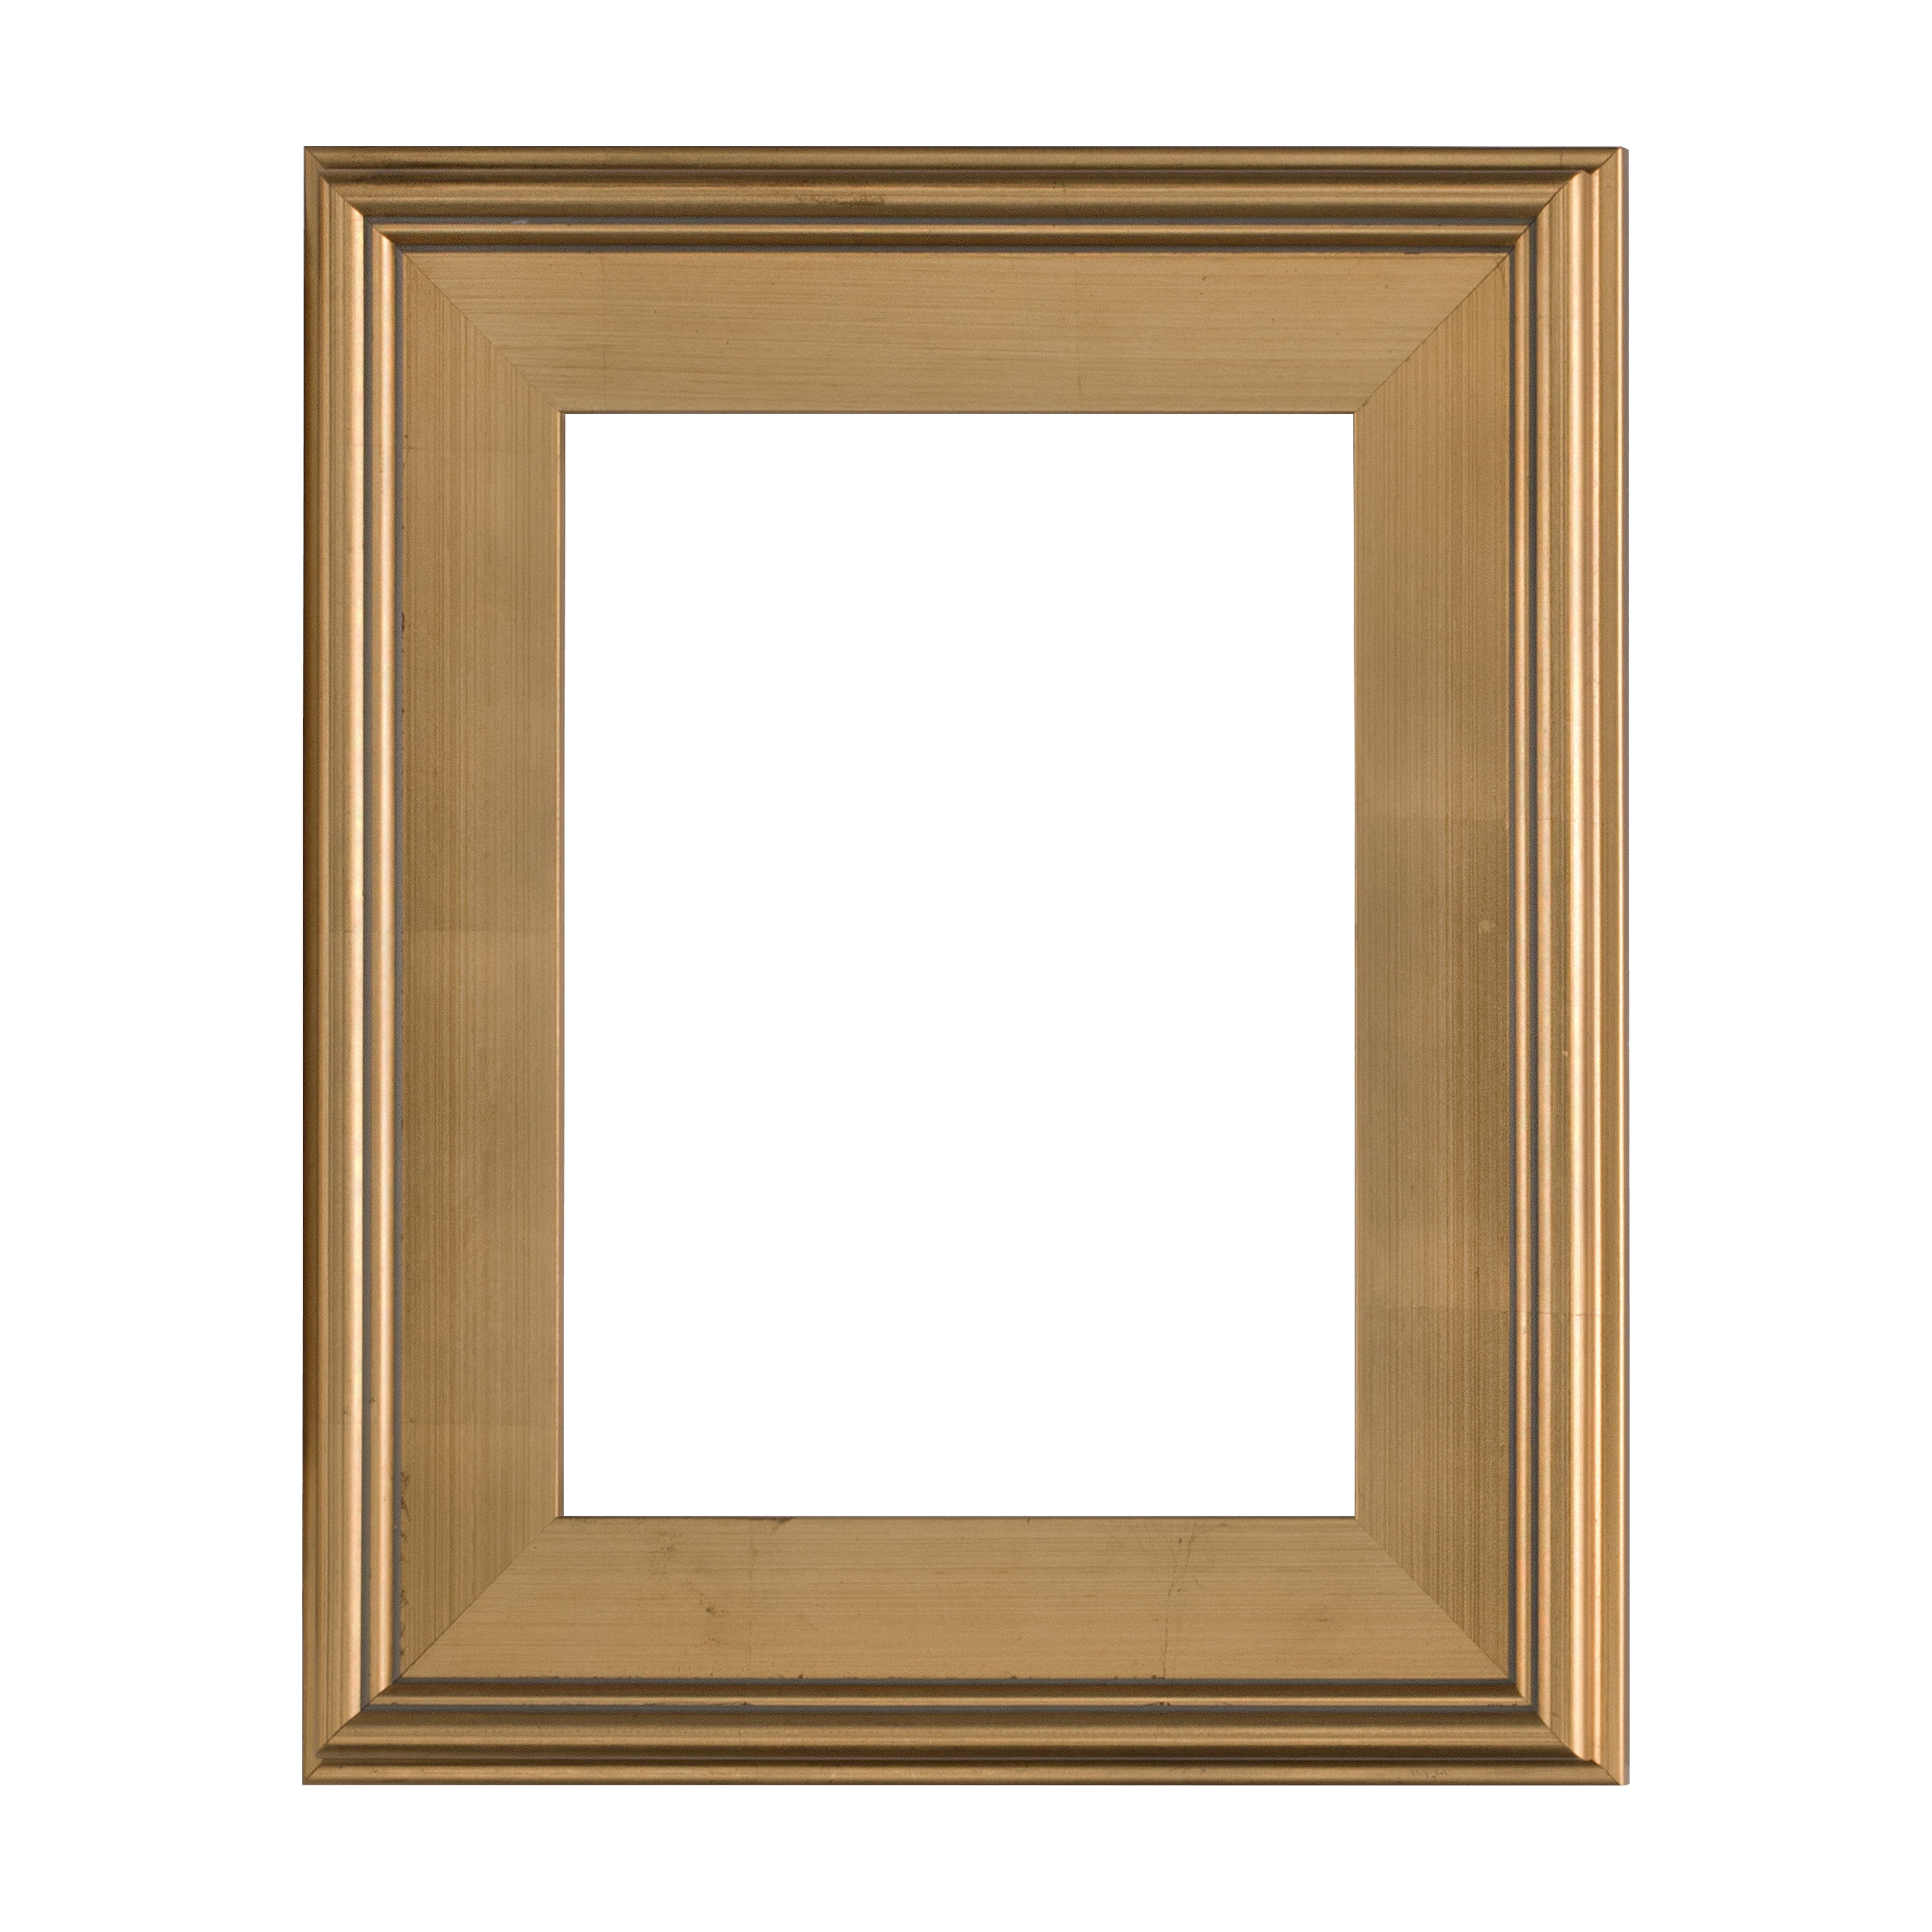 Buy Frame Gold Wood 30x30 cm here 